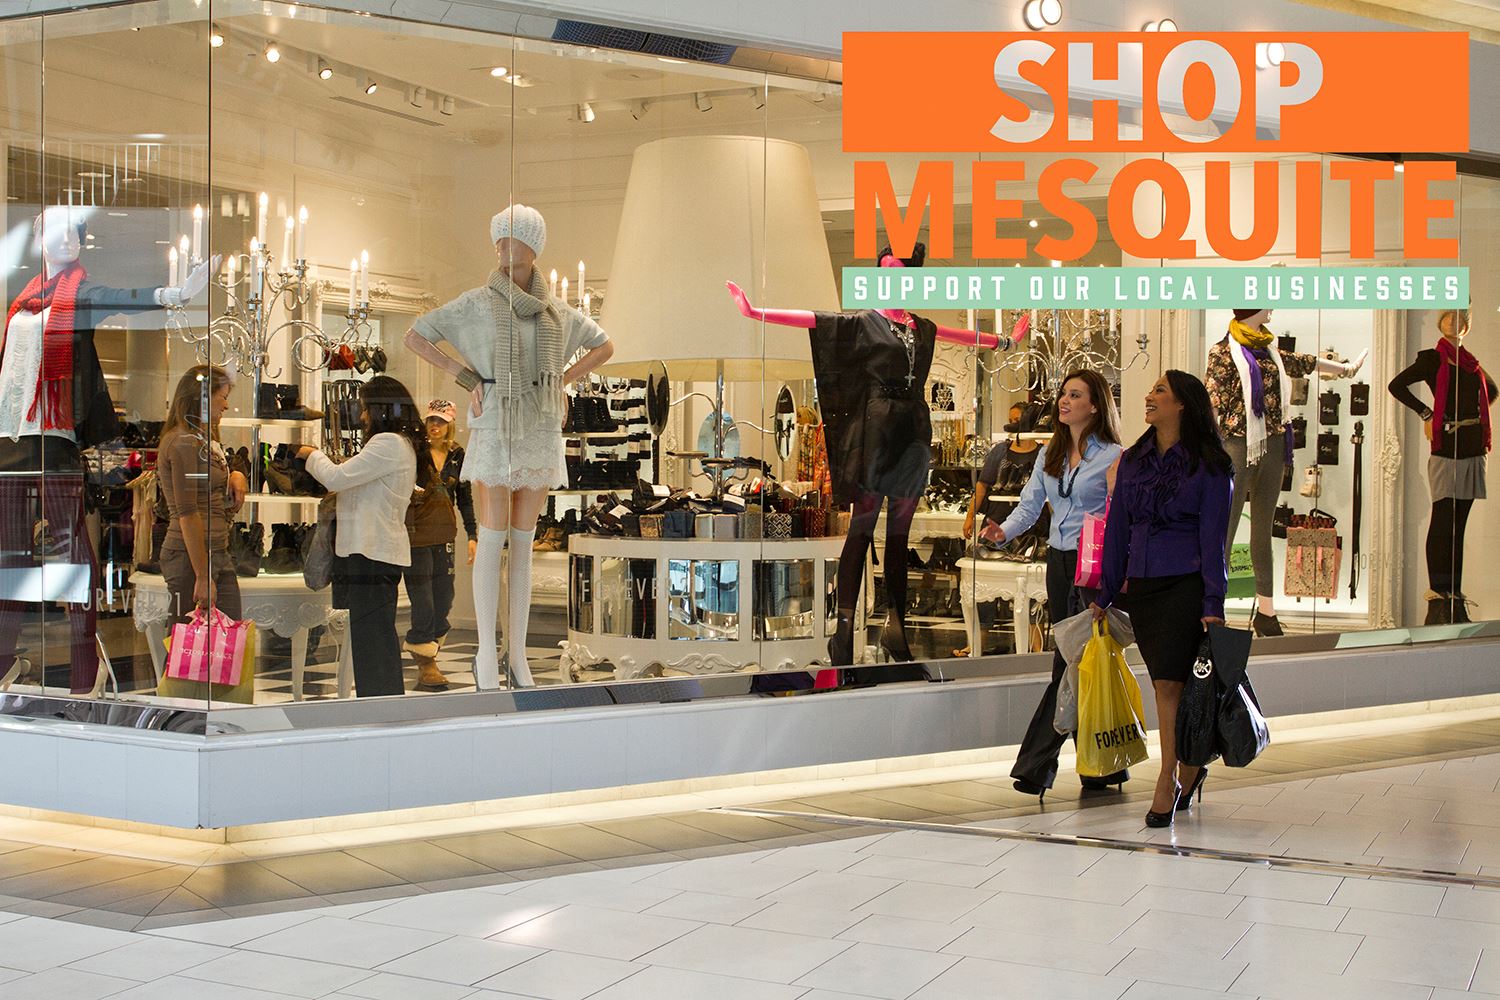 https://cdn.saffire.com/images.ashx?t=ig&rid=MesquiteCVB&i=Shop_Mesquite_-_Retail_-_Mall(17).jpg